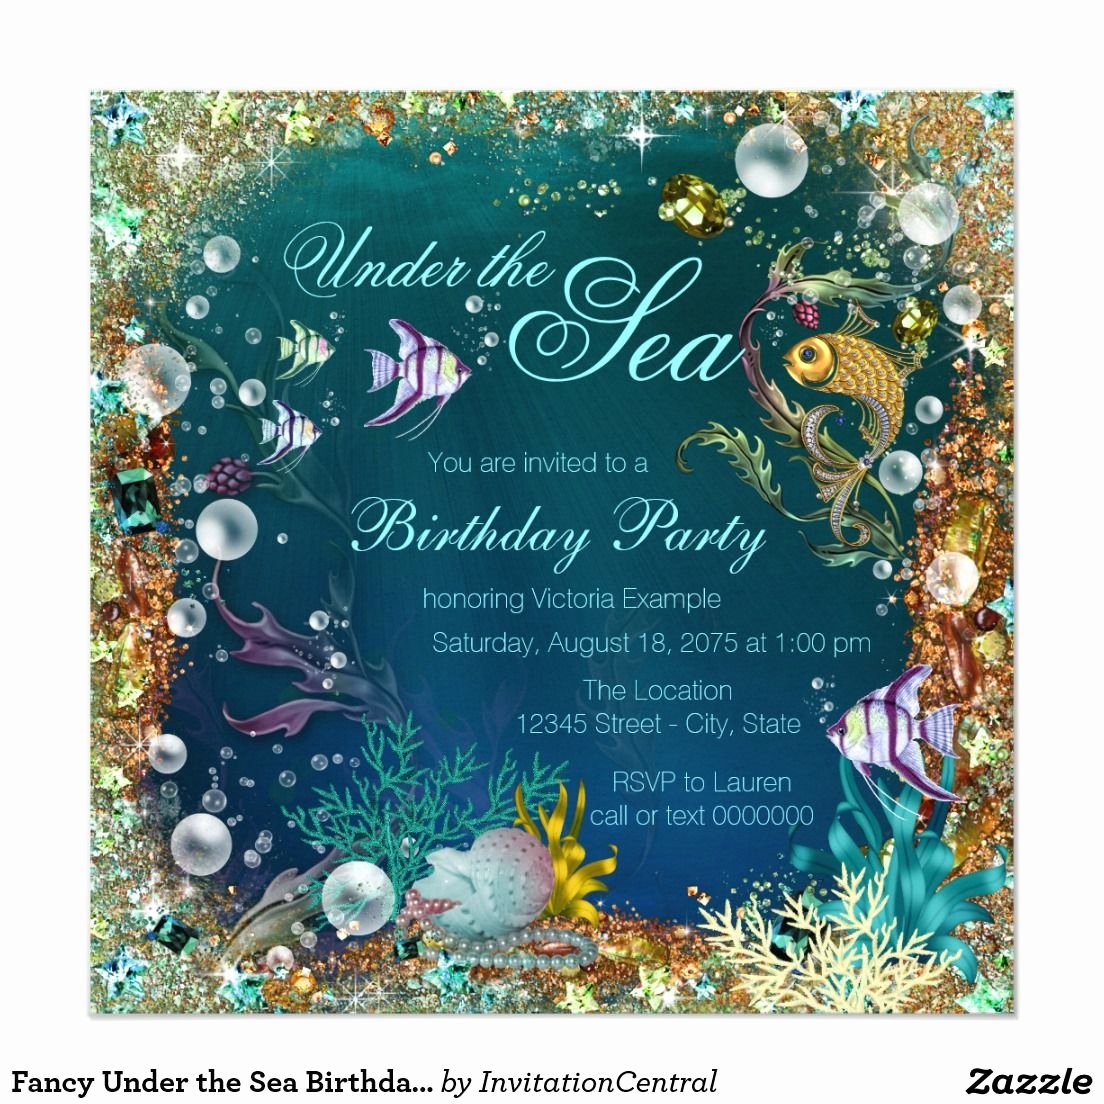 Under the Sea Invitation Templates Inspirational Fancy Under the Sea Birthday Party Invitation